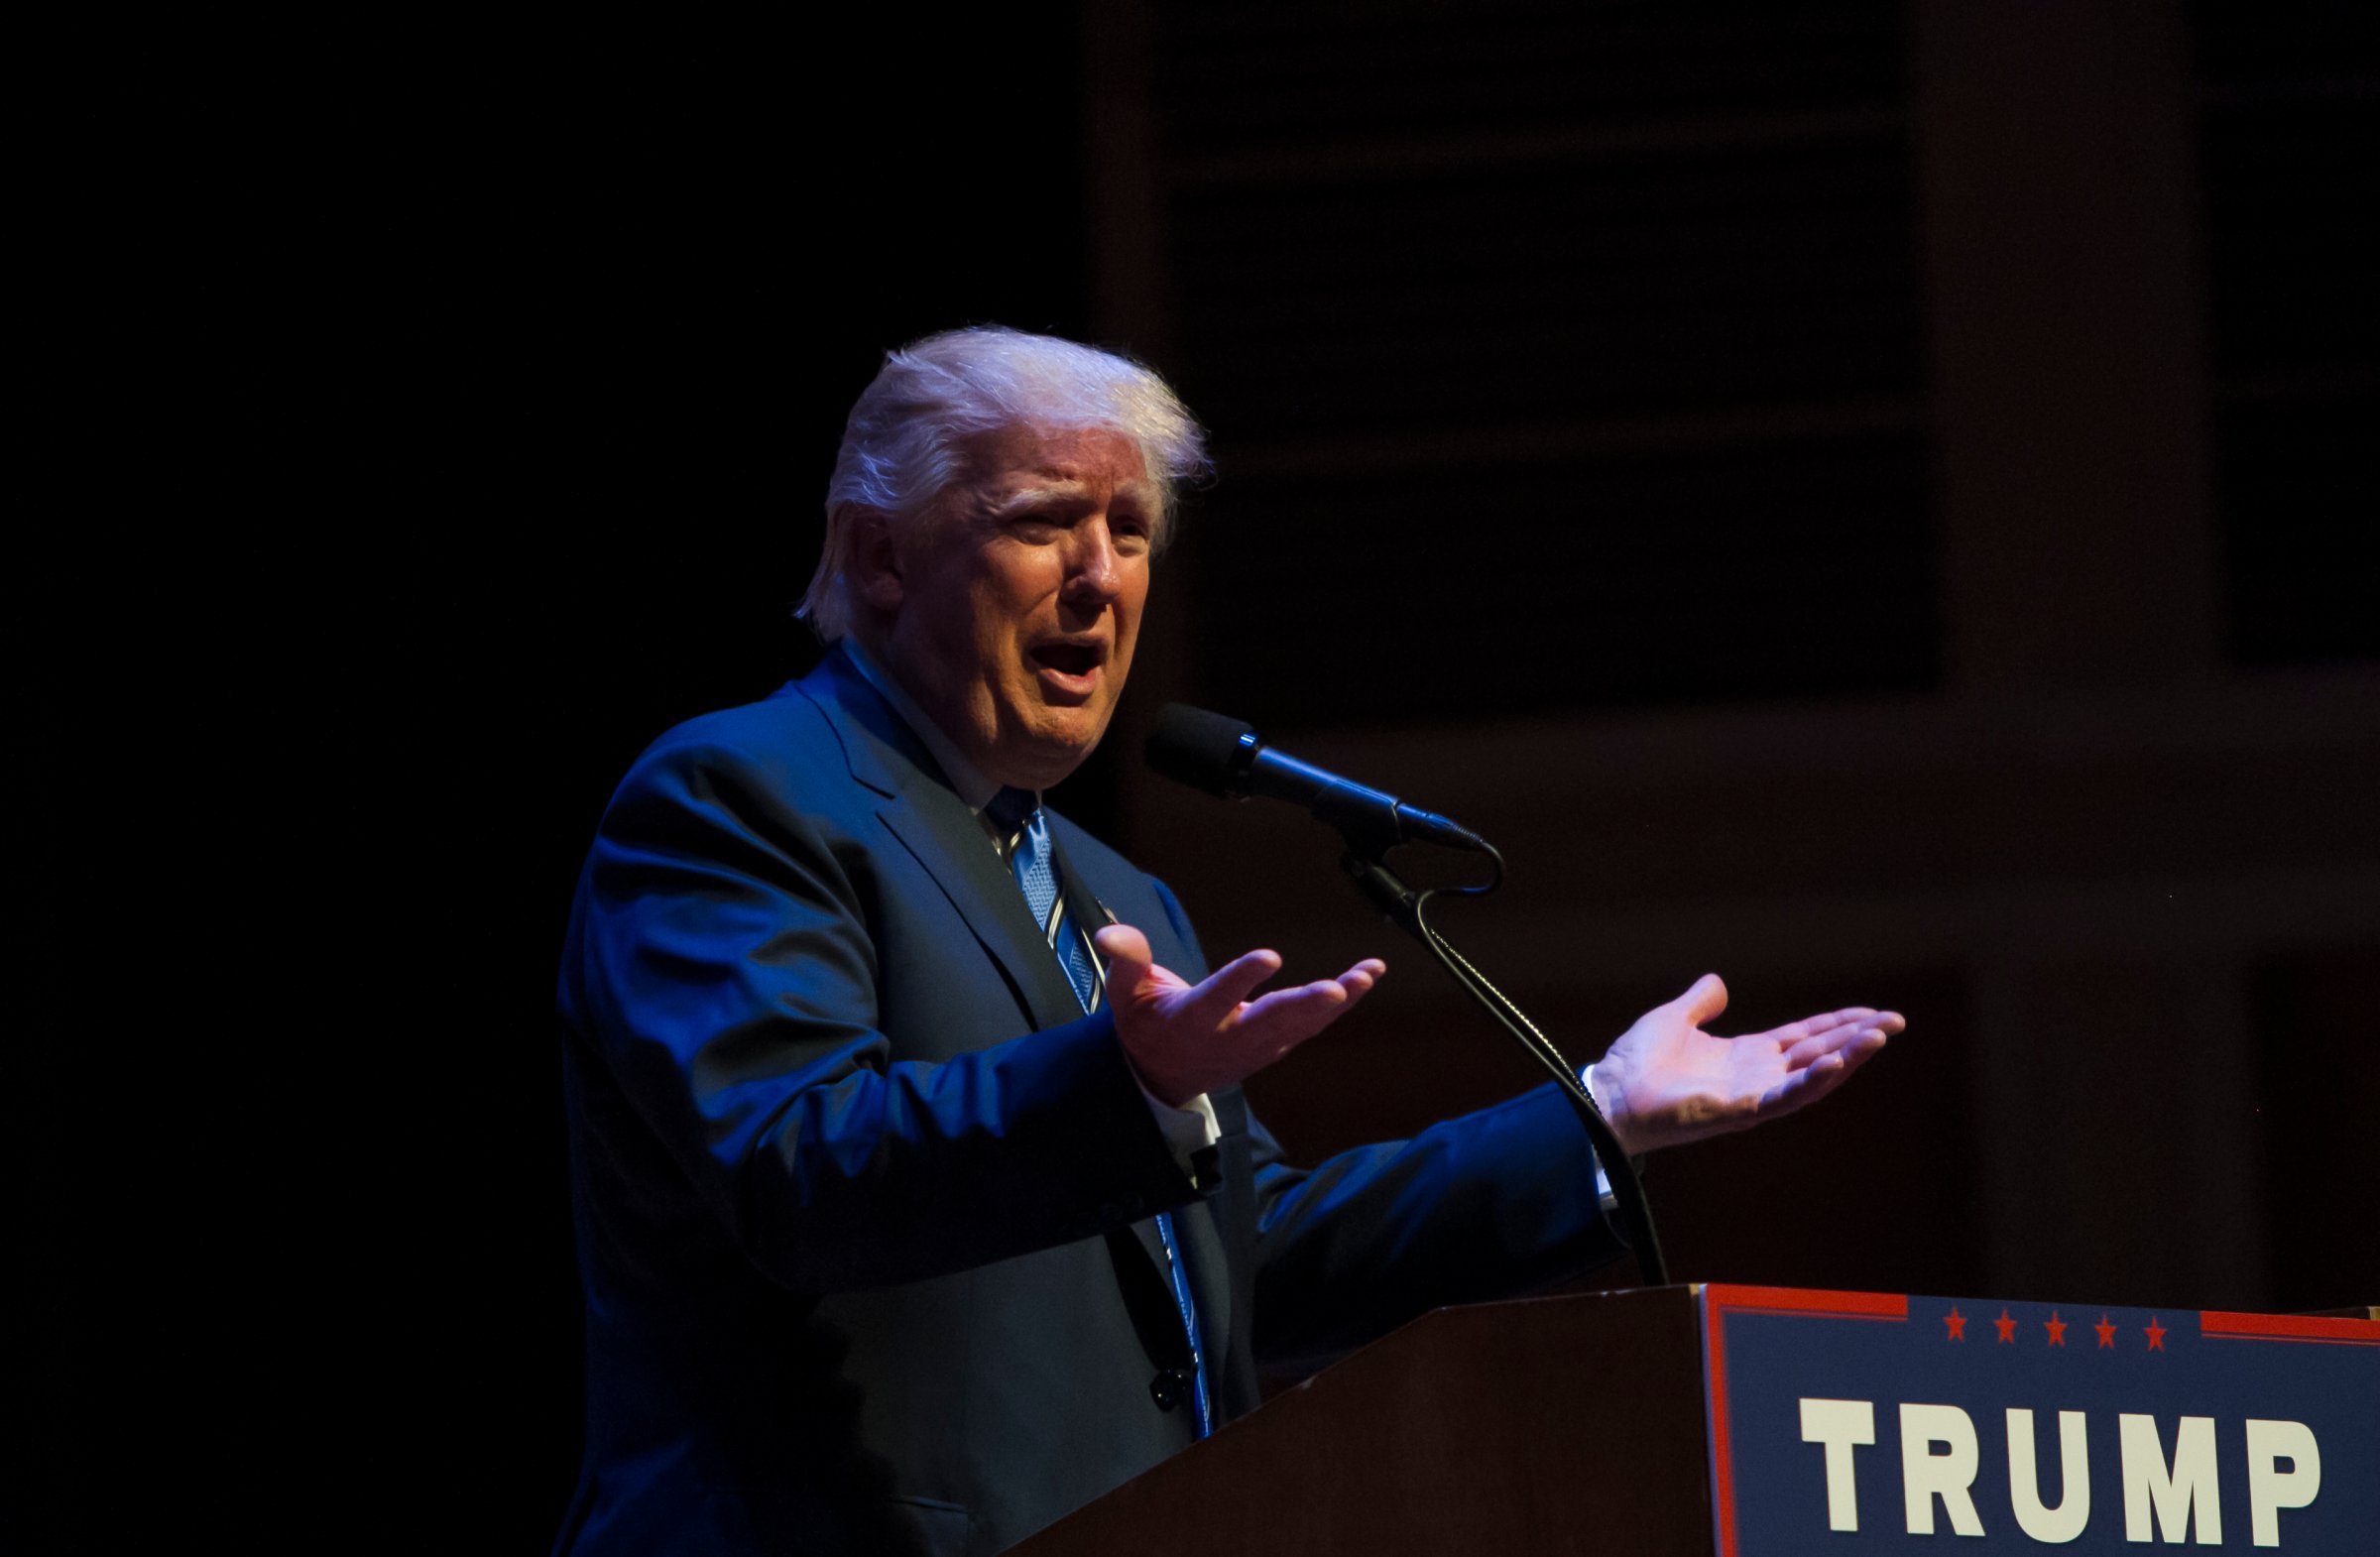 Republican Presidential candidate Donald Trump speaks at the Merrill Auditorium in Portland, Maine, on Aug. 4, 2016.